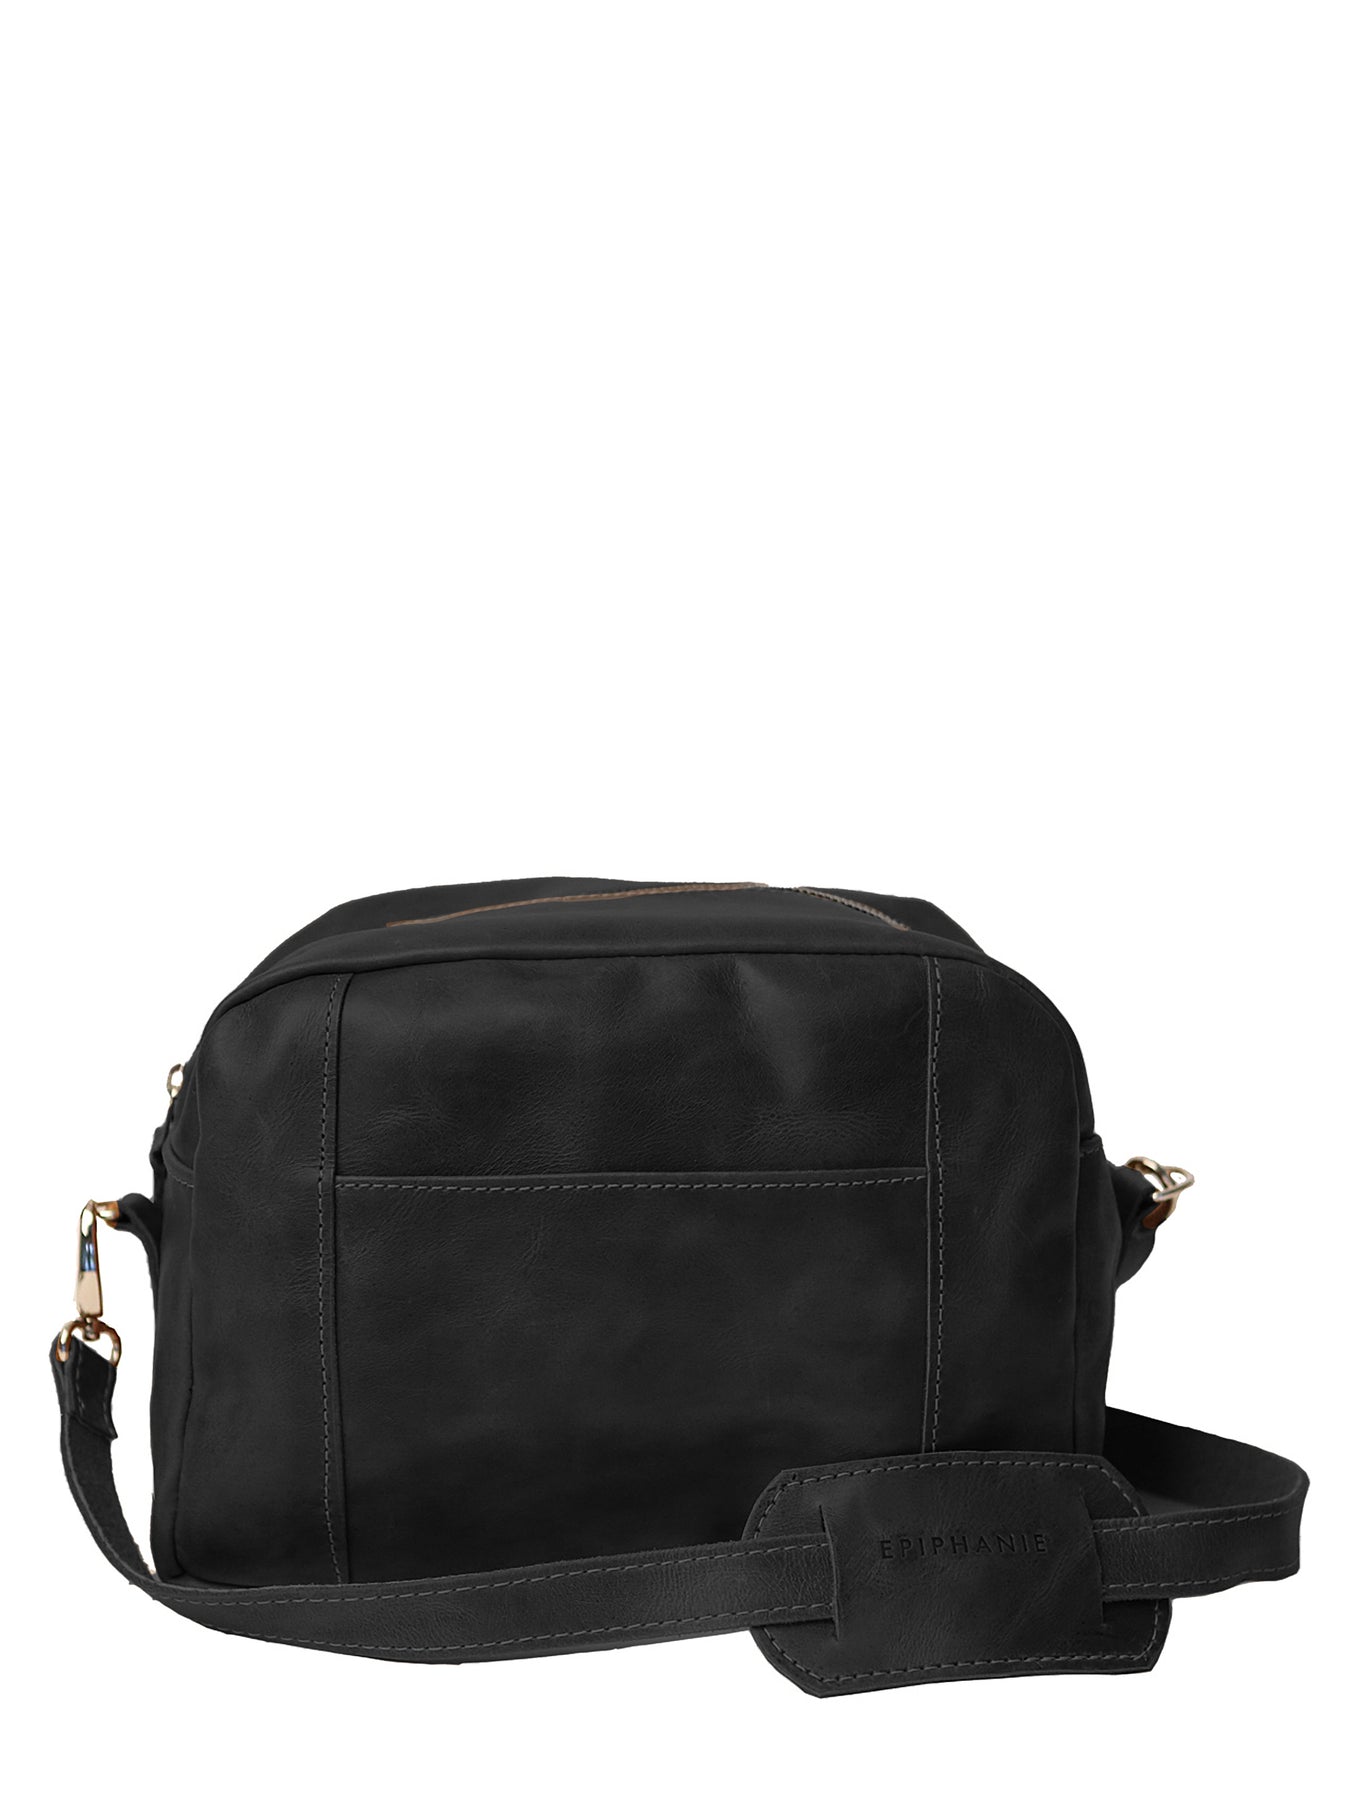 Charlotte Shoulder Handbag With Matching Wallet by Mia K - Walmart.com